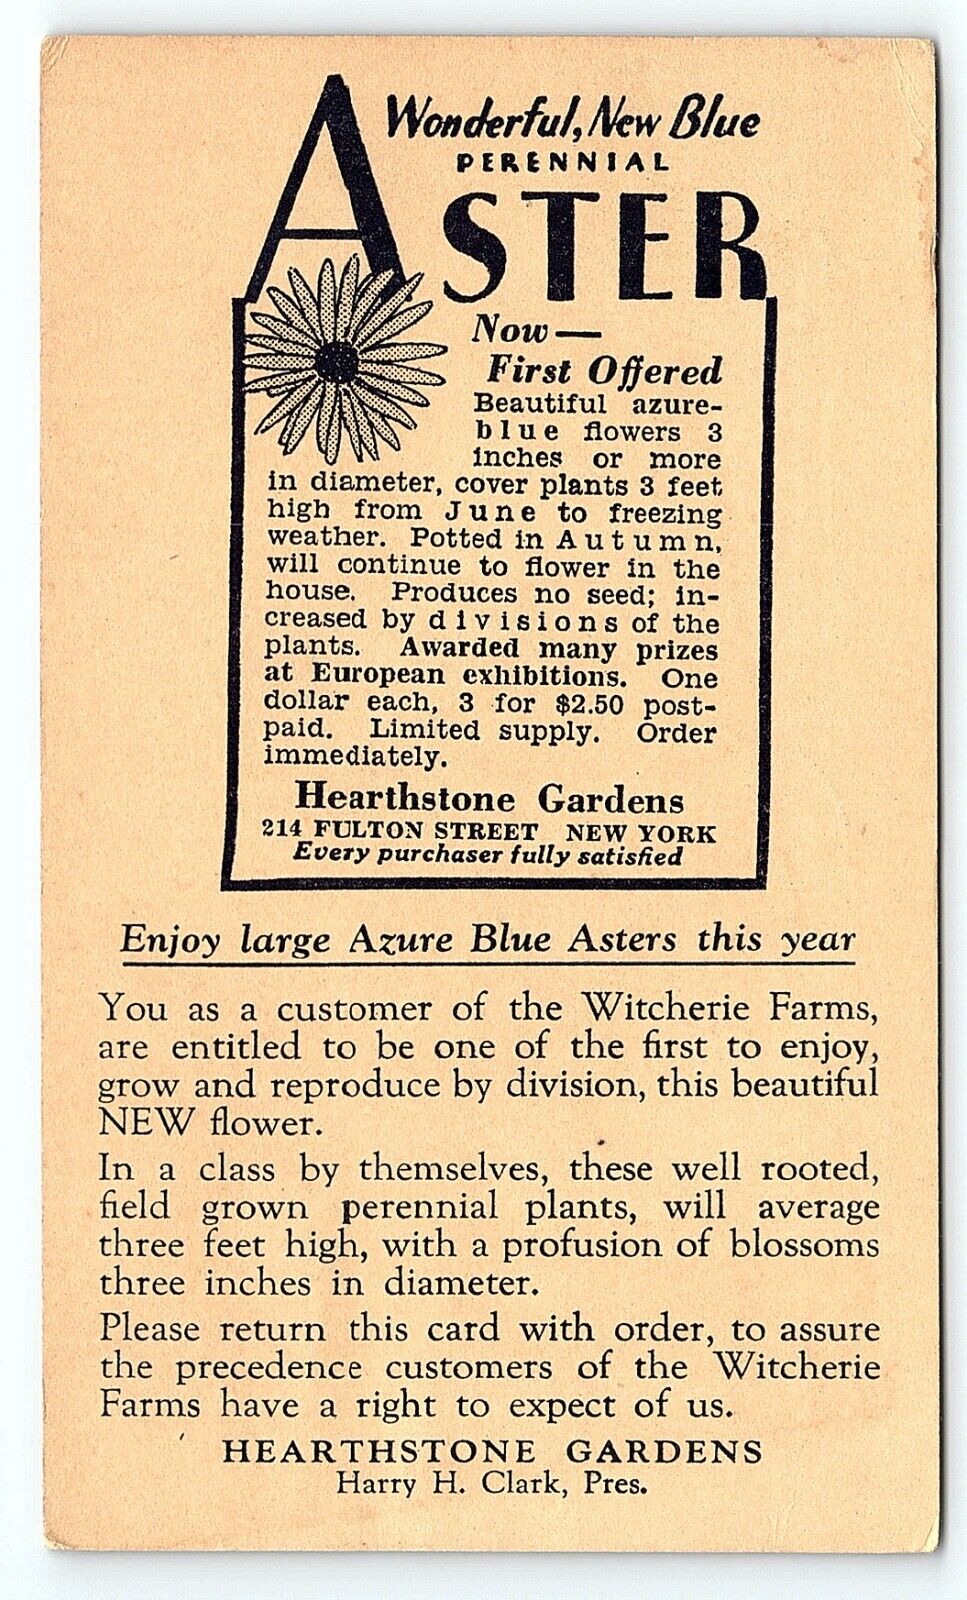 1932 HEARTHSTONE GARDENS WONDERFUL NEW BLUE PERENNIAL ASTER AD POSTCARD P3532